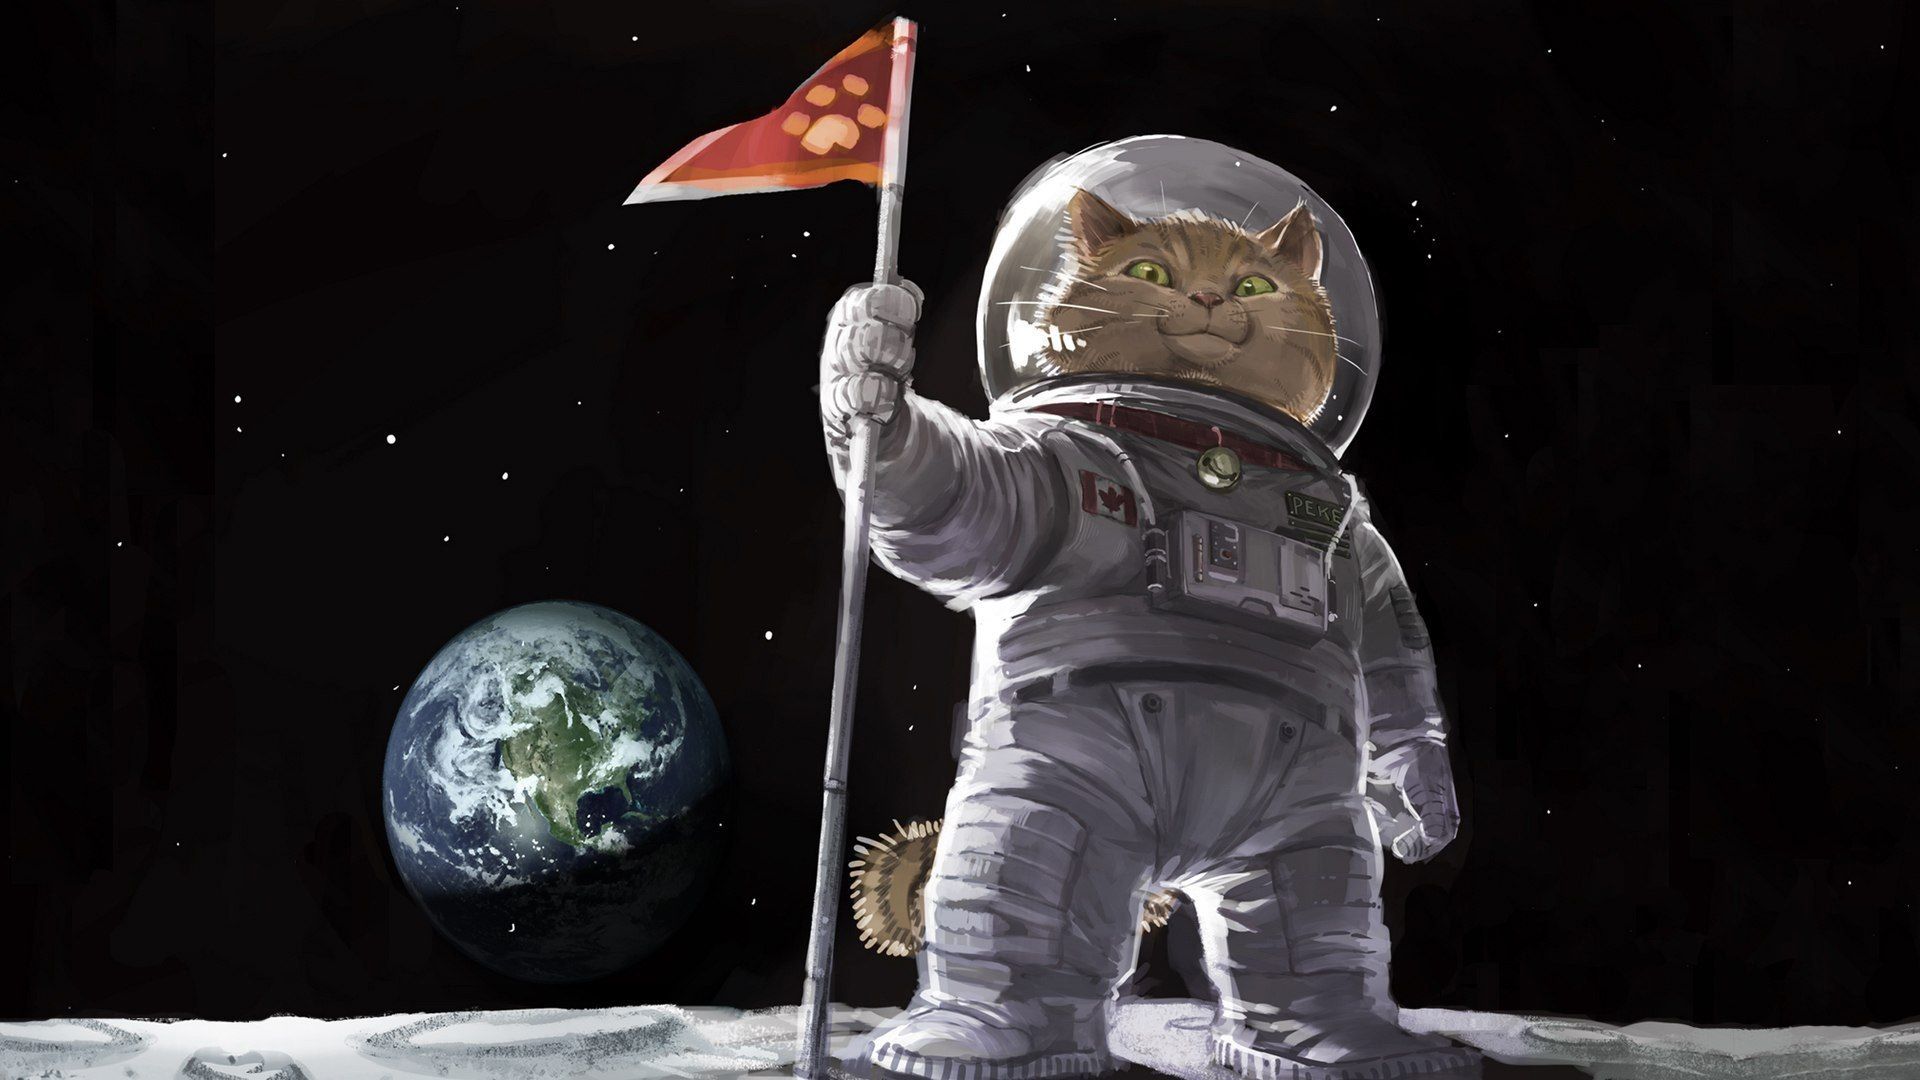 Cartoons Cat Astronaut On The Moon wallpaper (2022)